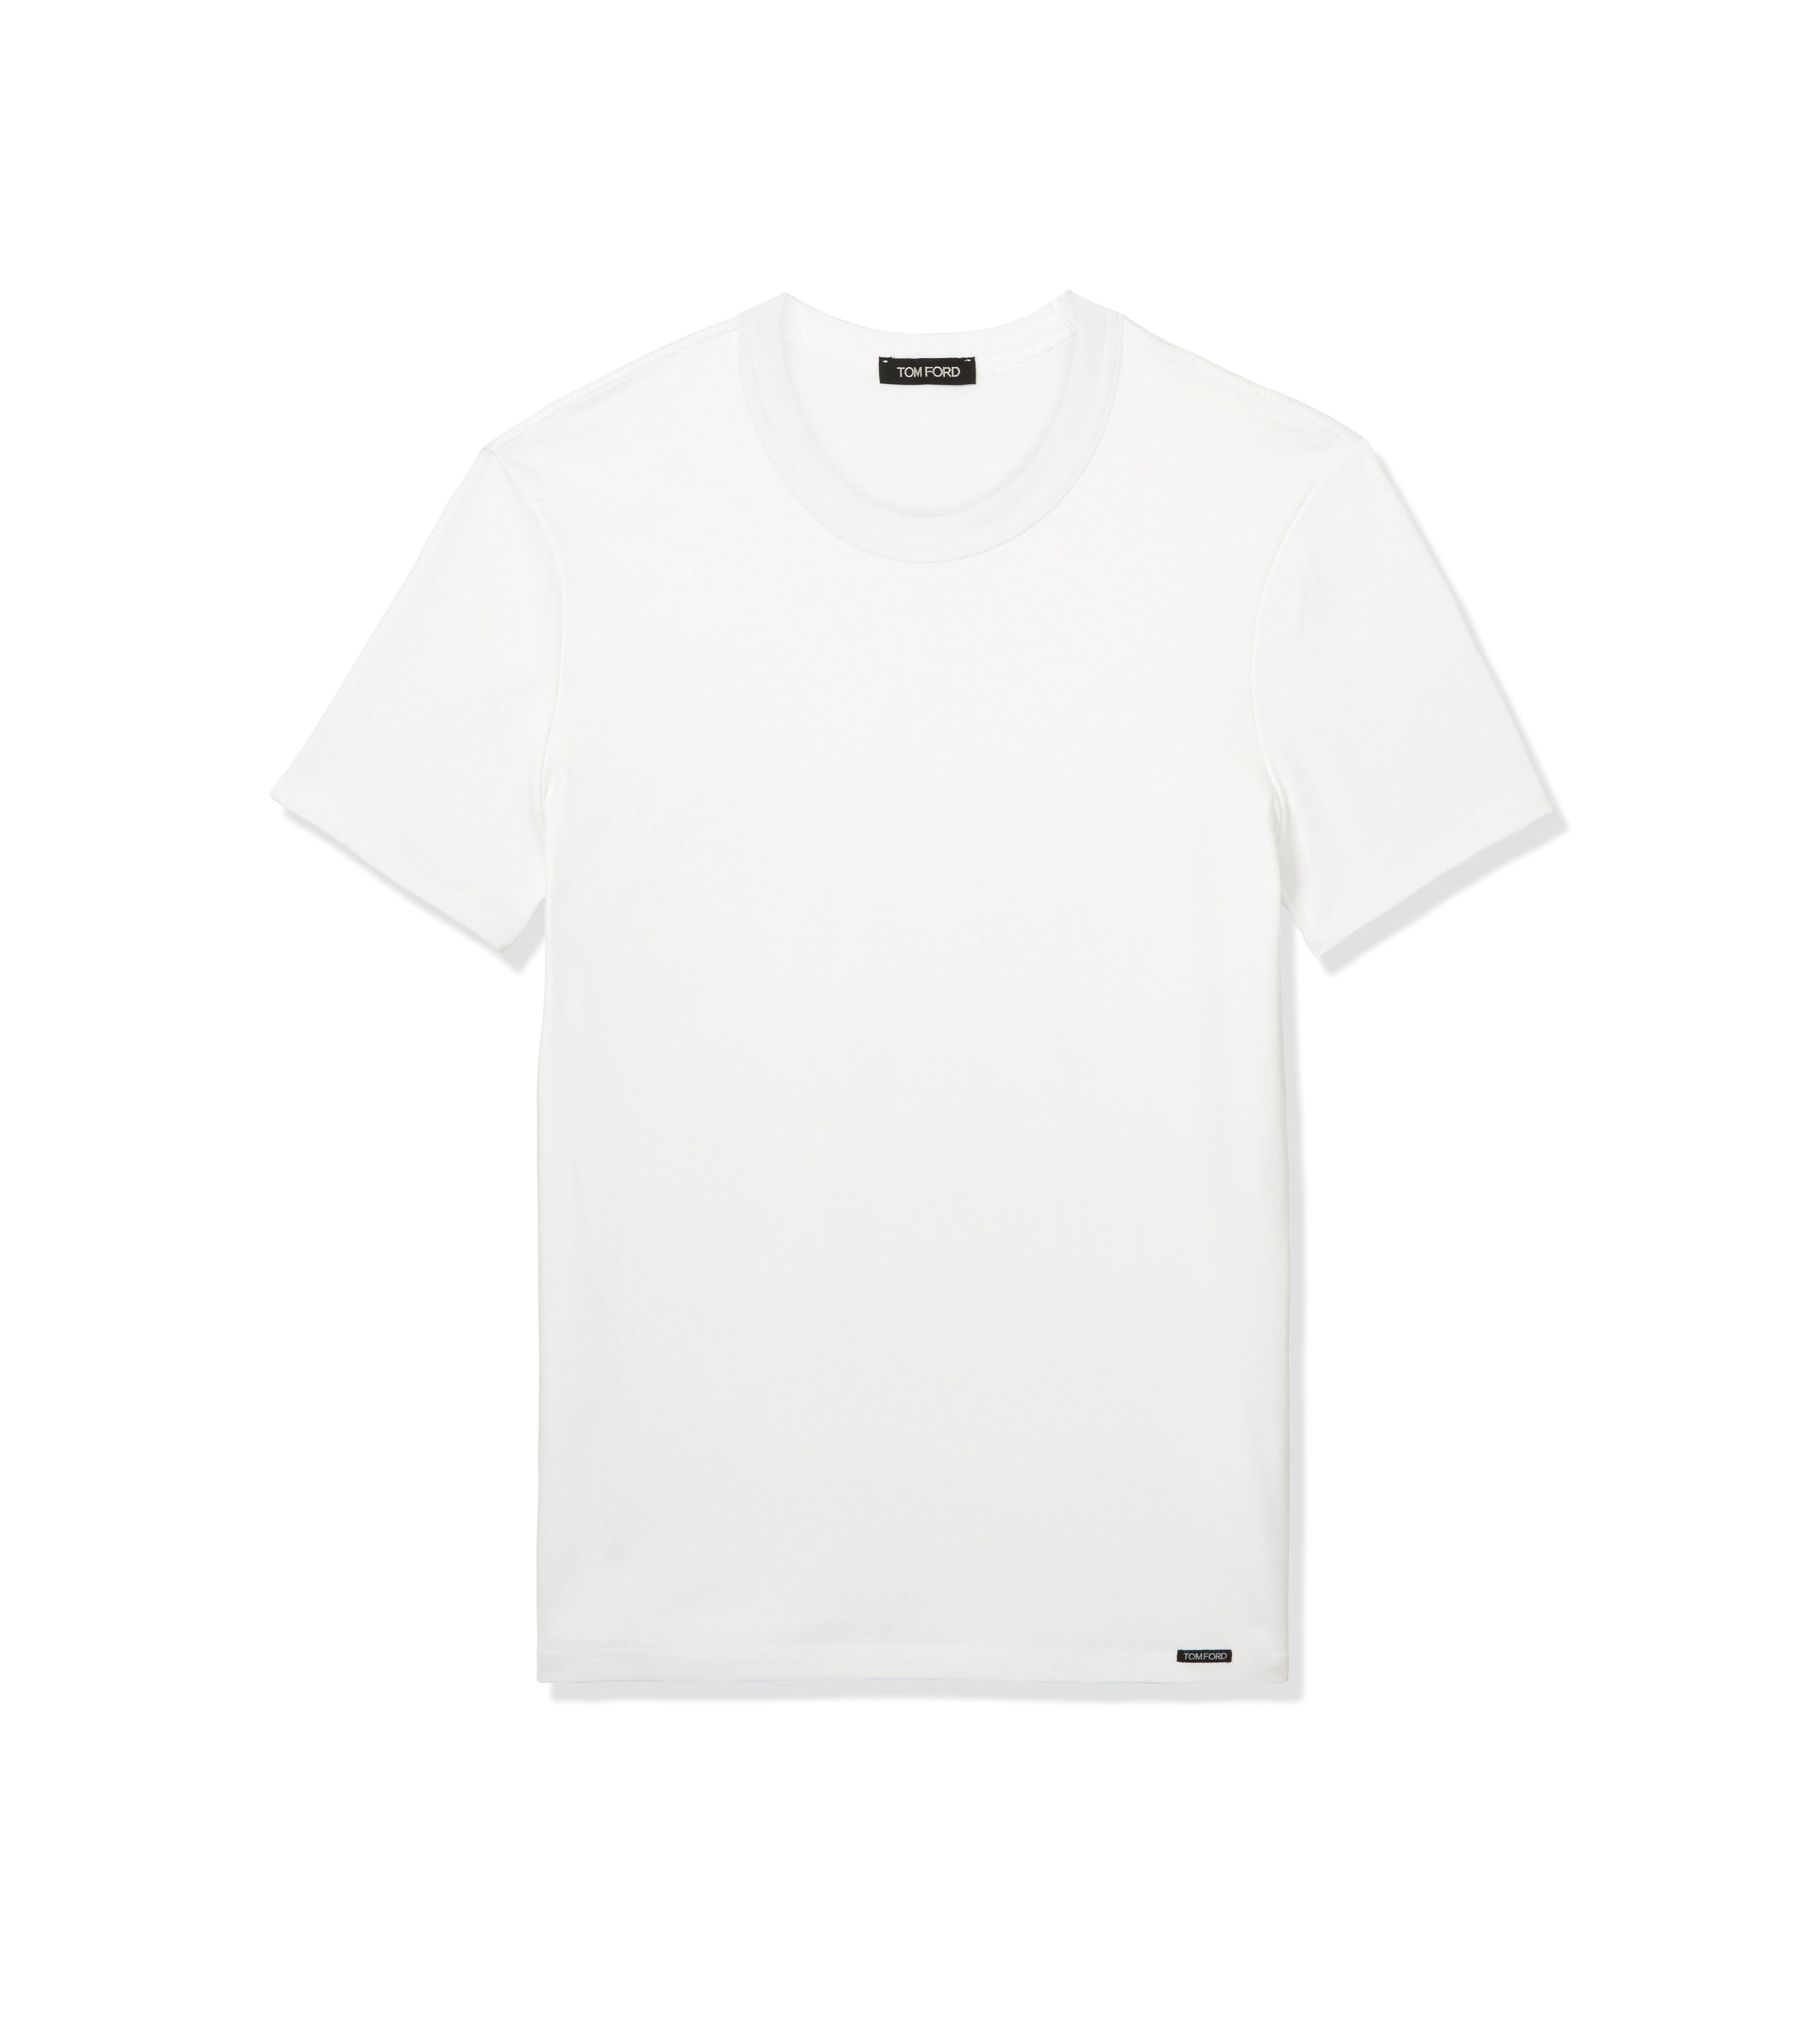 T-SHIRTS - T-Shirts | TomFord.co.uk